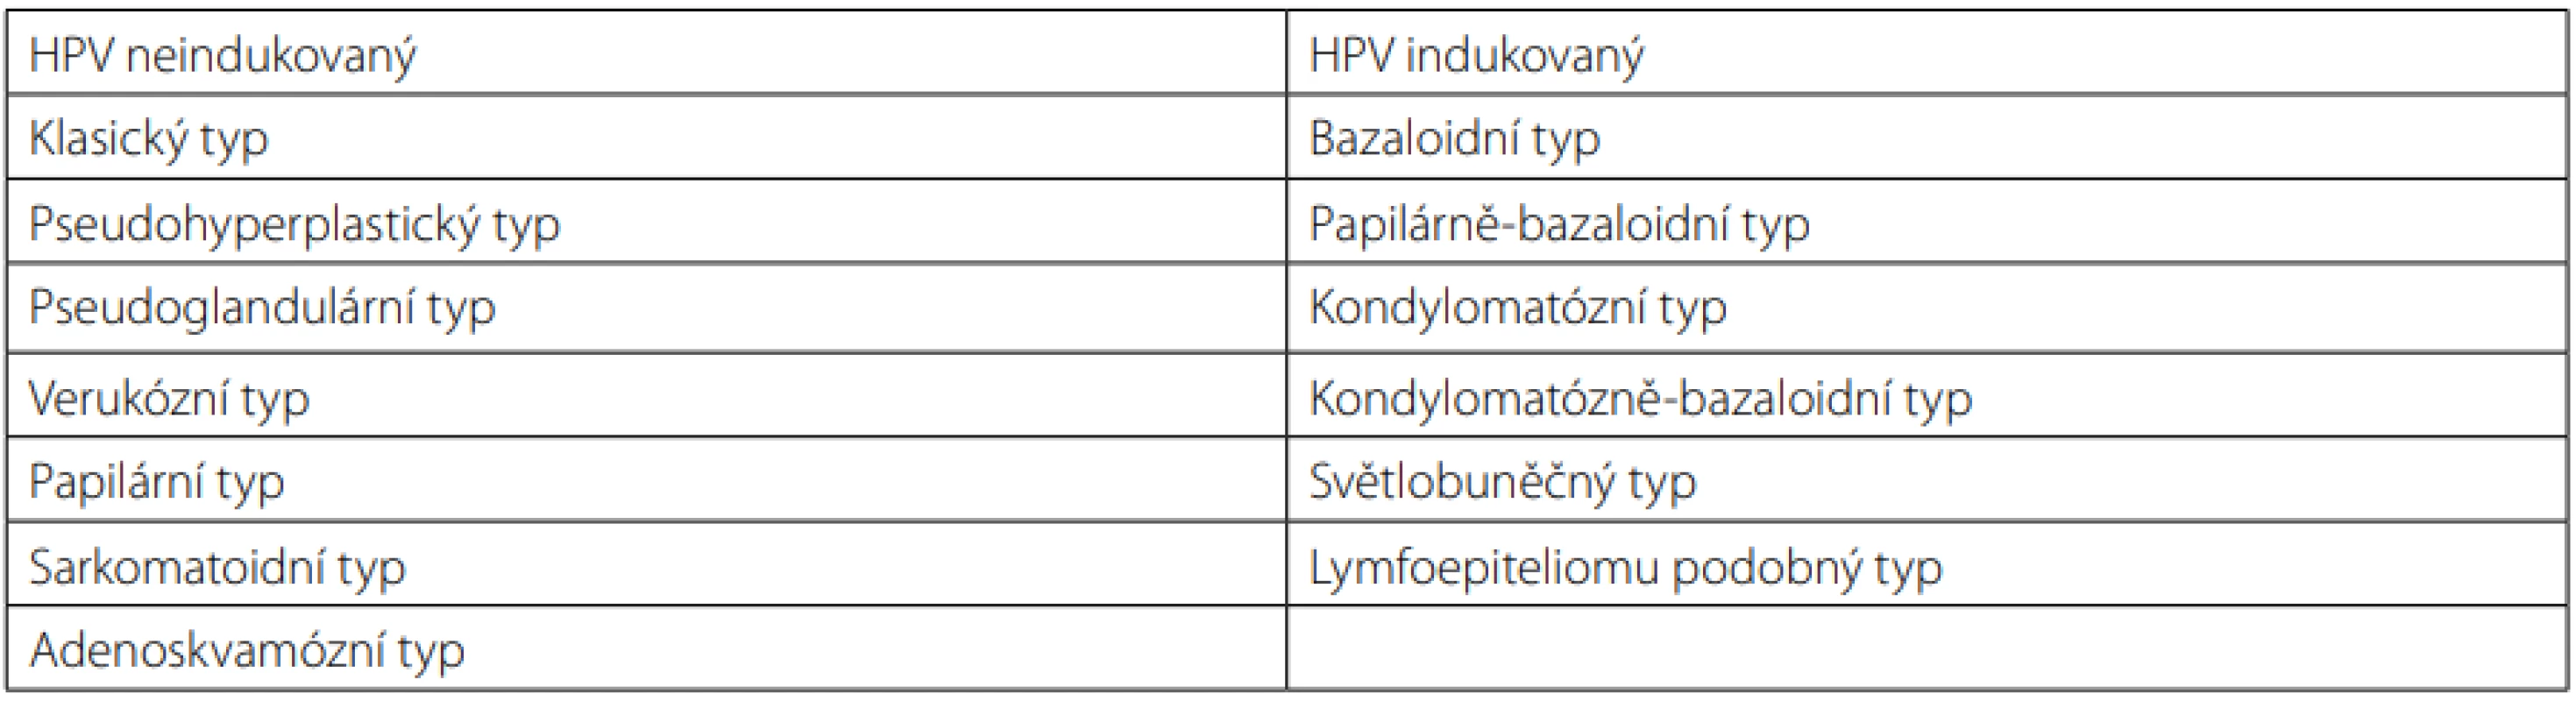 WHO 2016 klasifikace dlaždicobuněčného karcinomu penisu (10)<br>
Tab. 1. The 2016 WHO classification of penile squamous cell carcinoma